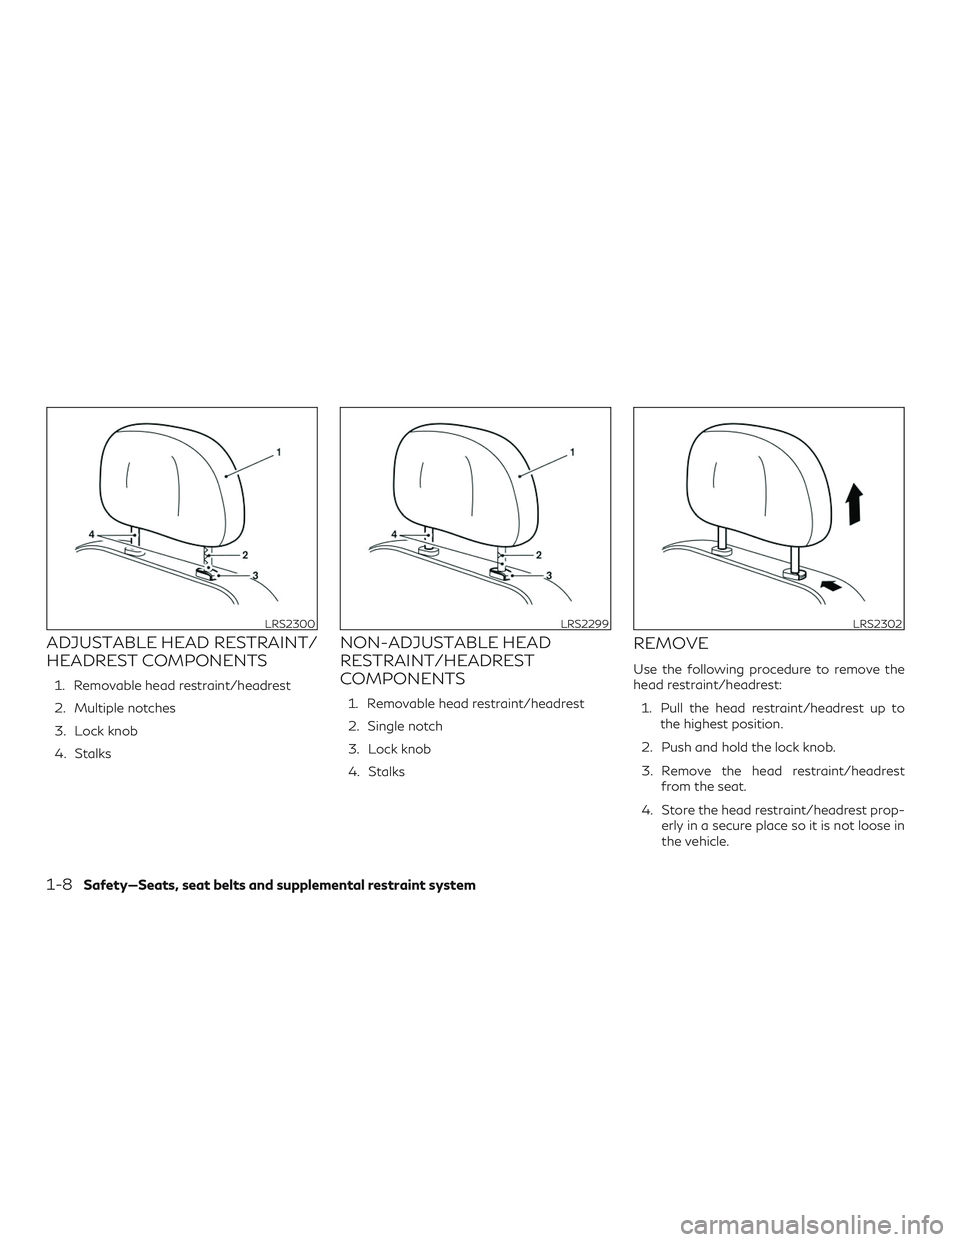 INFINITI QX50 2019  Owners Manual ADJUSTABLE HEAD RESTRAINT/
HEADREST COMPONENTS
1. Removable head restraint/headrest
2. Multiple notches
3. Lock knob
4. Stalks
NON-ADJUSTABLE HEAD
RESTRAINT/HEADREST
COMPONENTS
1. Removable head restr